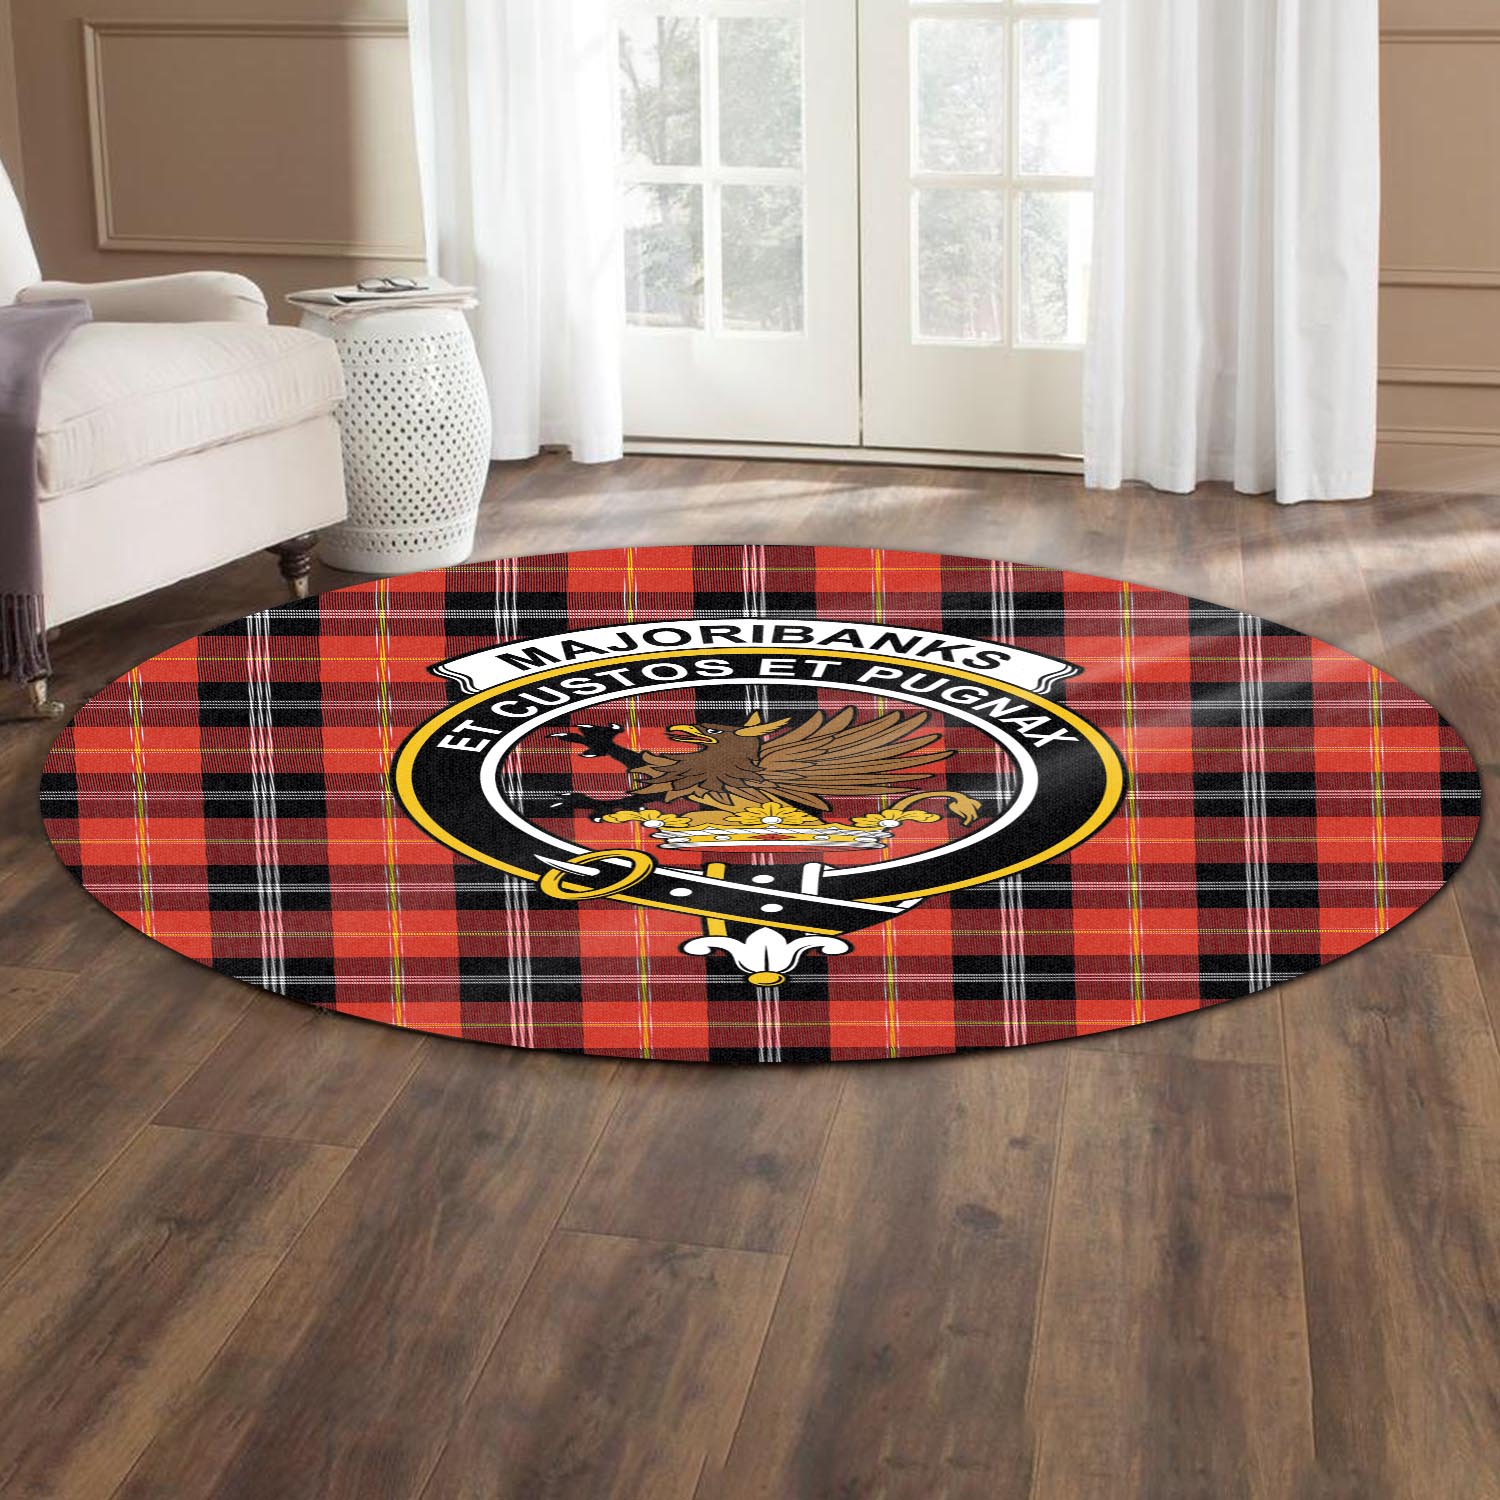 majoribanks-tartan-round-rug-with-family-crest